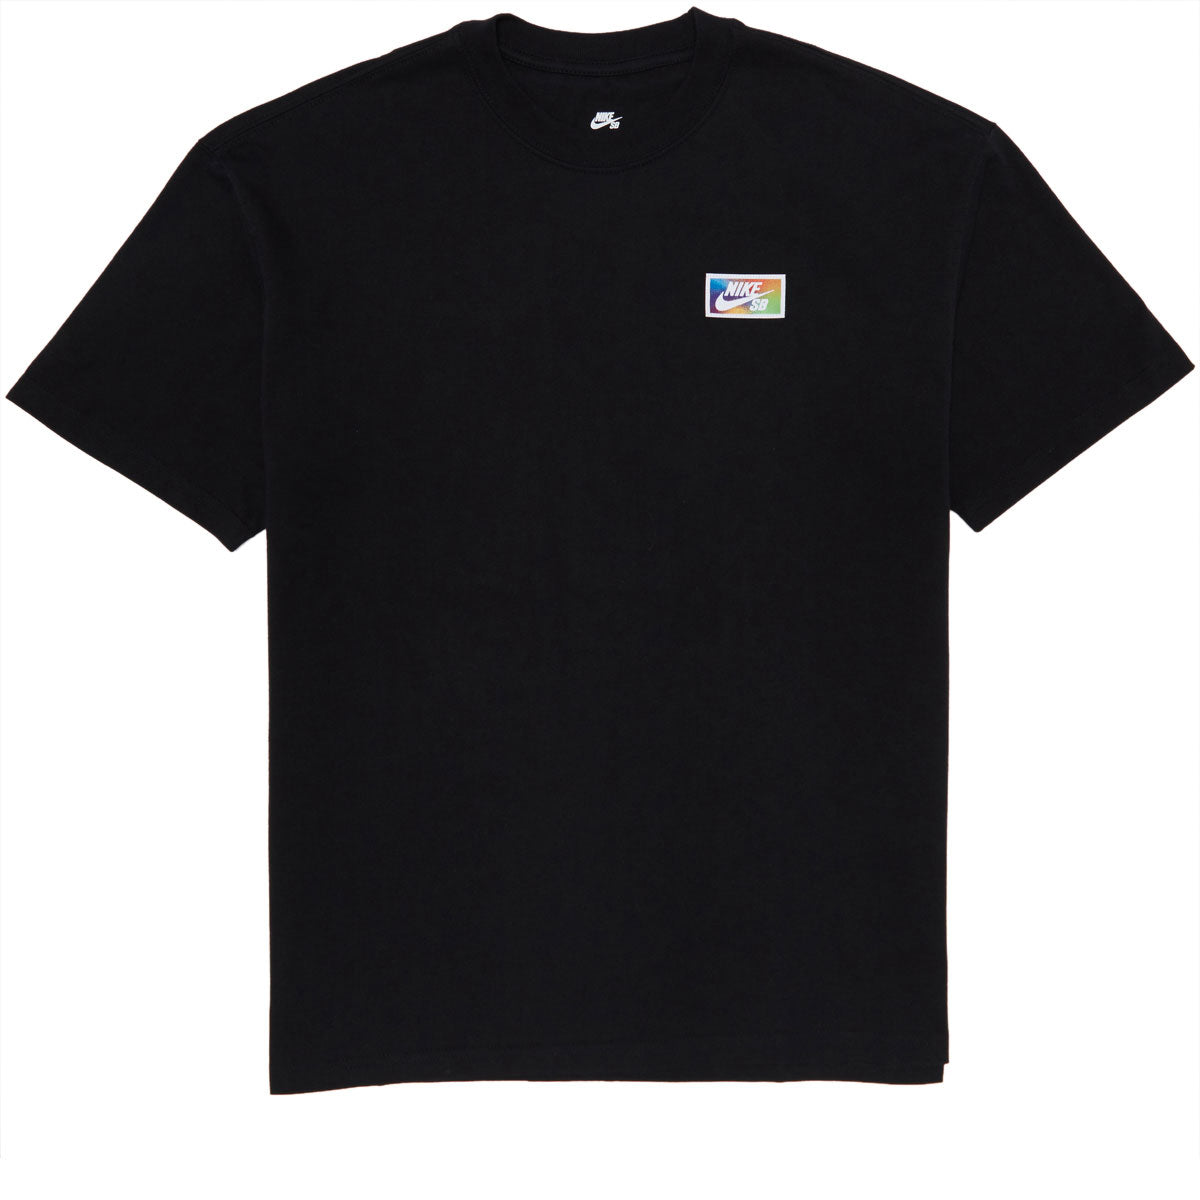 Nike SB Skatecast T-Shirt - Black image 1